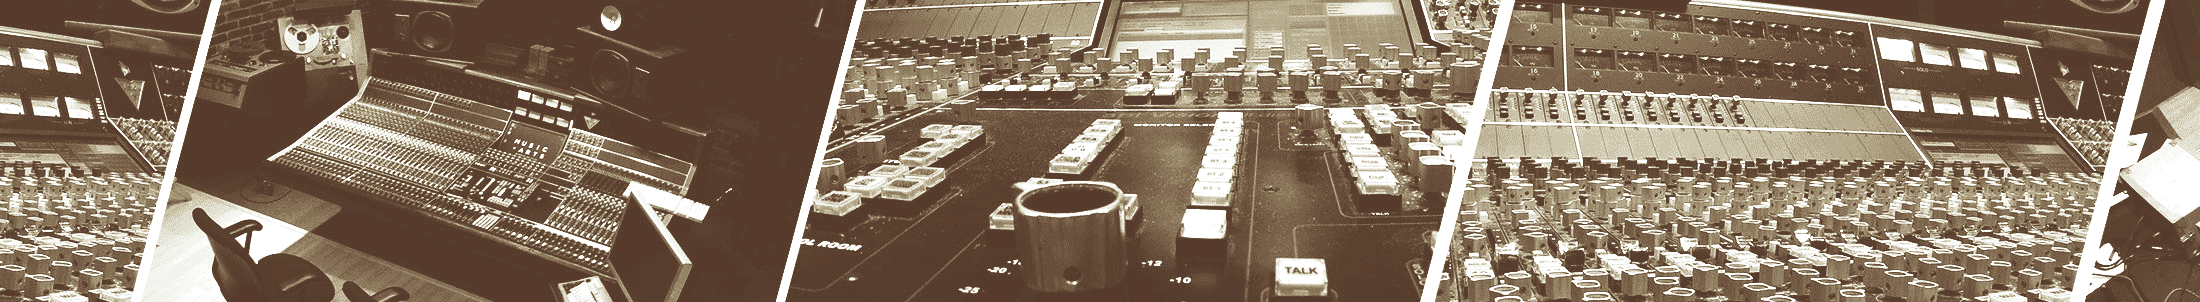 API 48 channel analog mixing desk